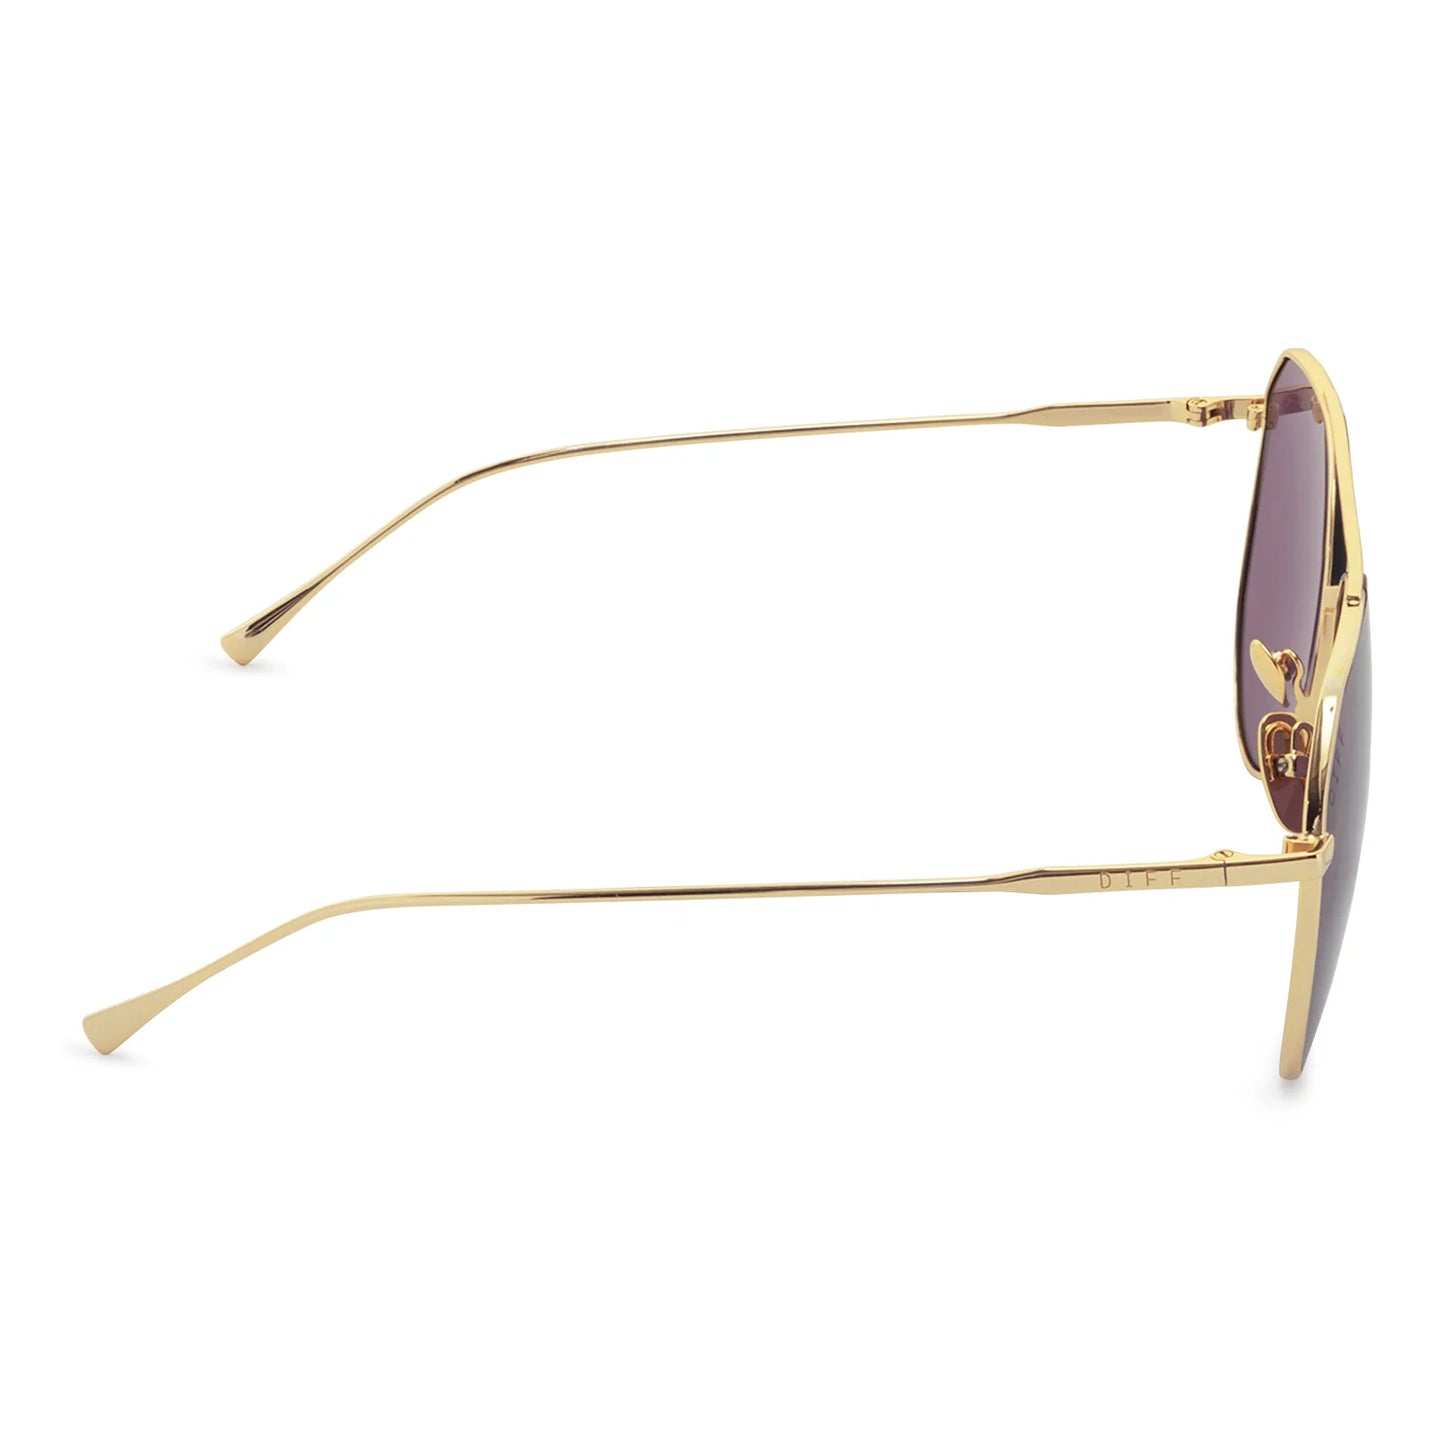 Dash Gold/Macarena Polarized Sunglasses